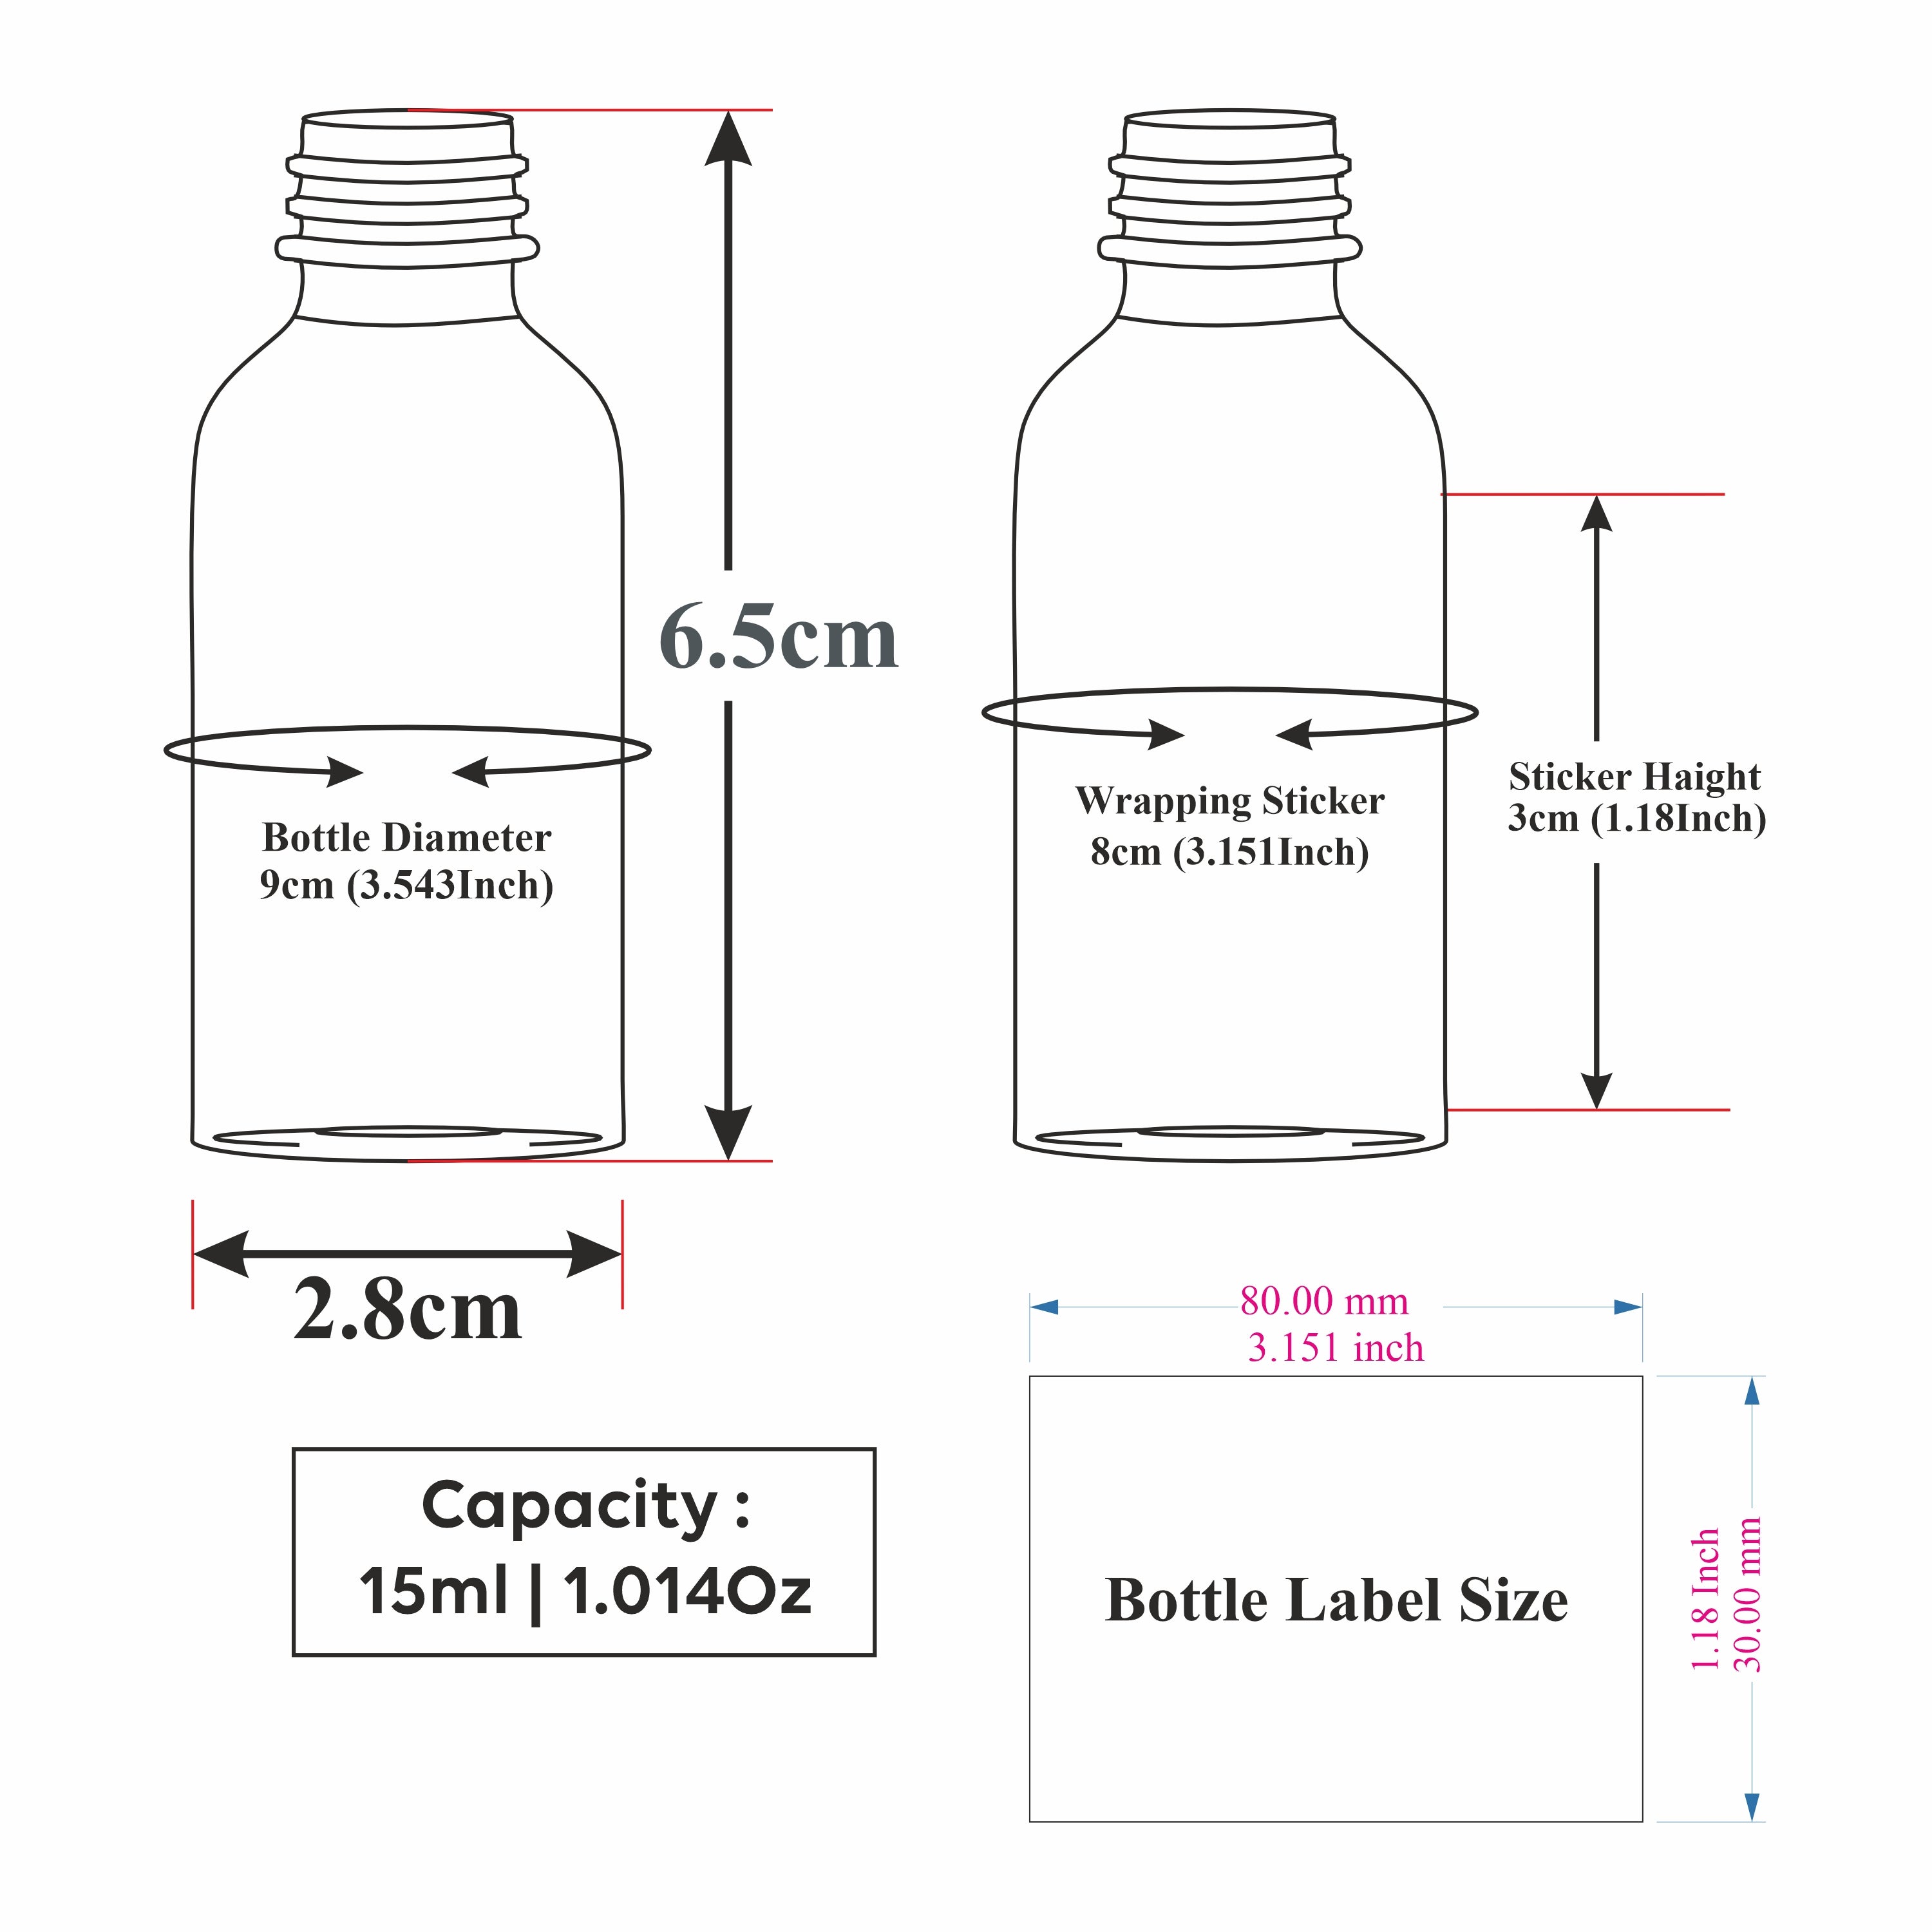 Transparent Glass Bottle With Golden Screw Cap| 15ml, 25ml,30ml [ZMG09]